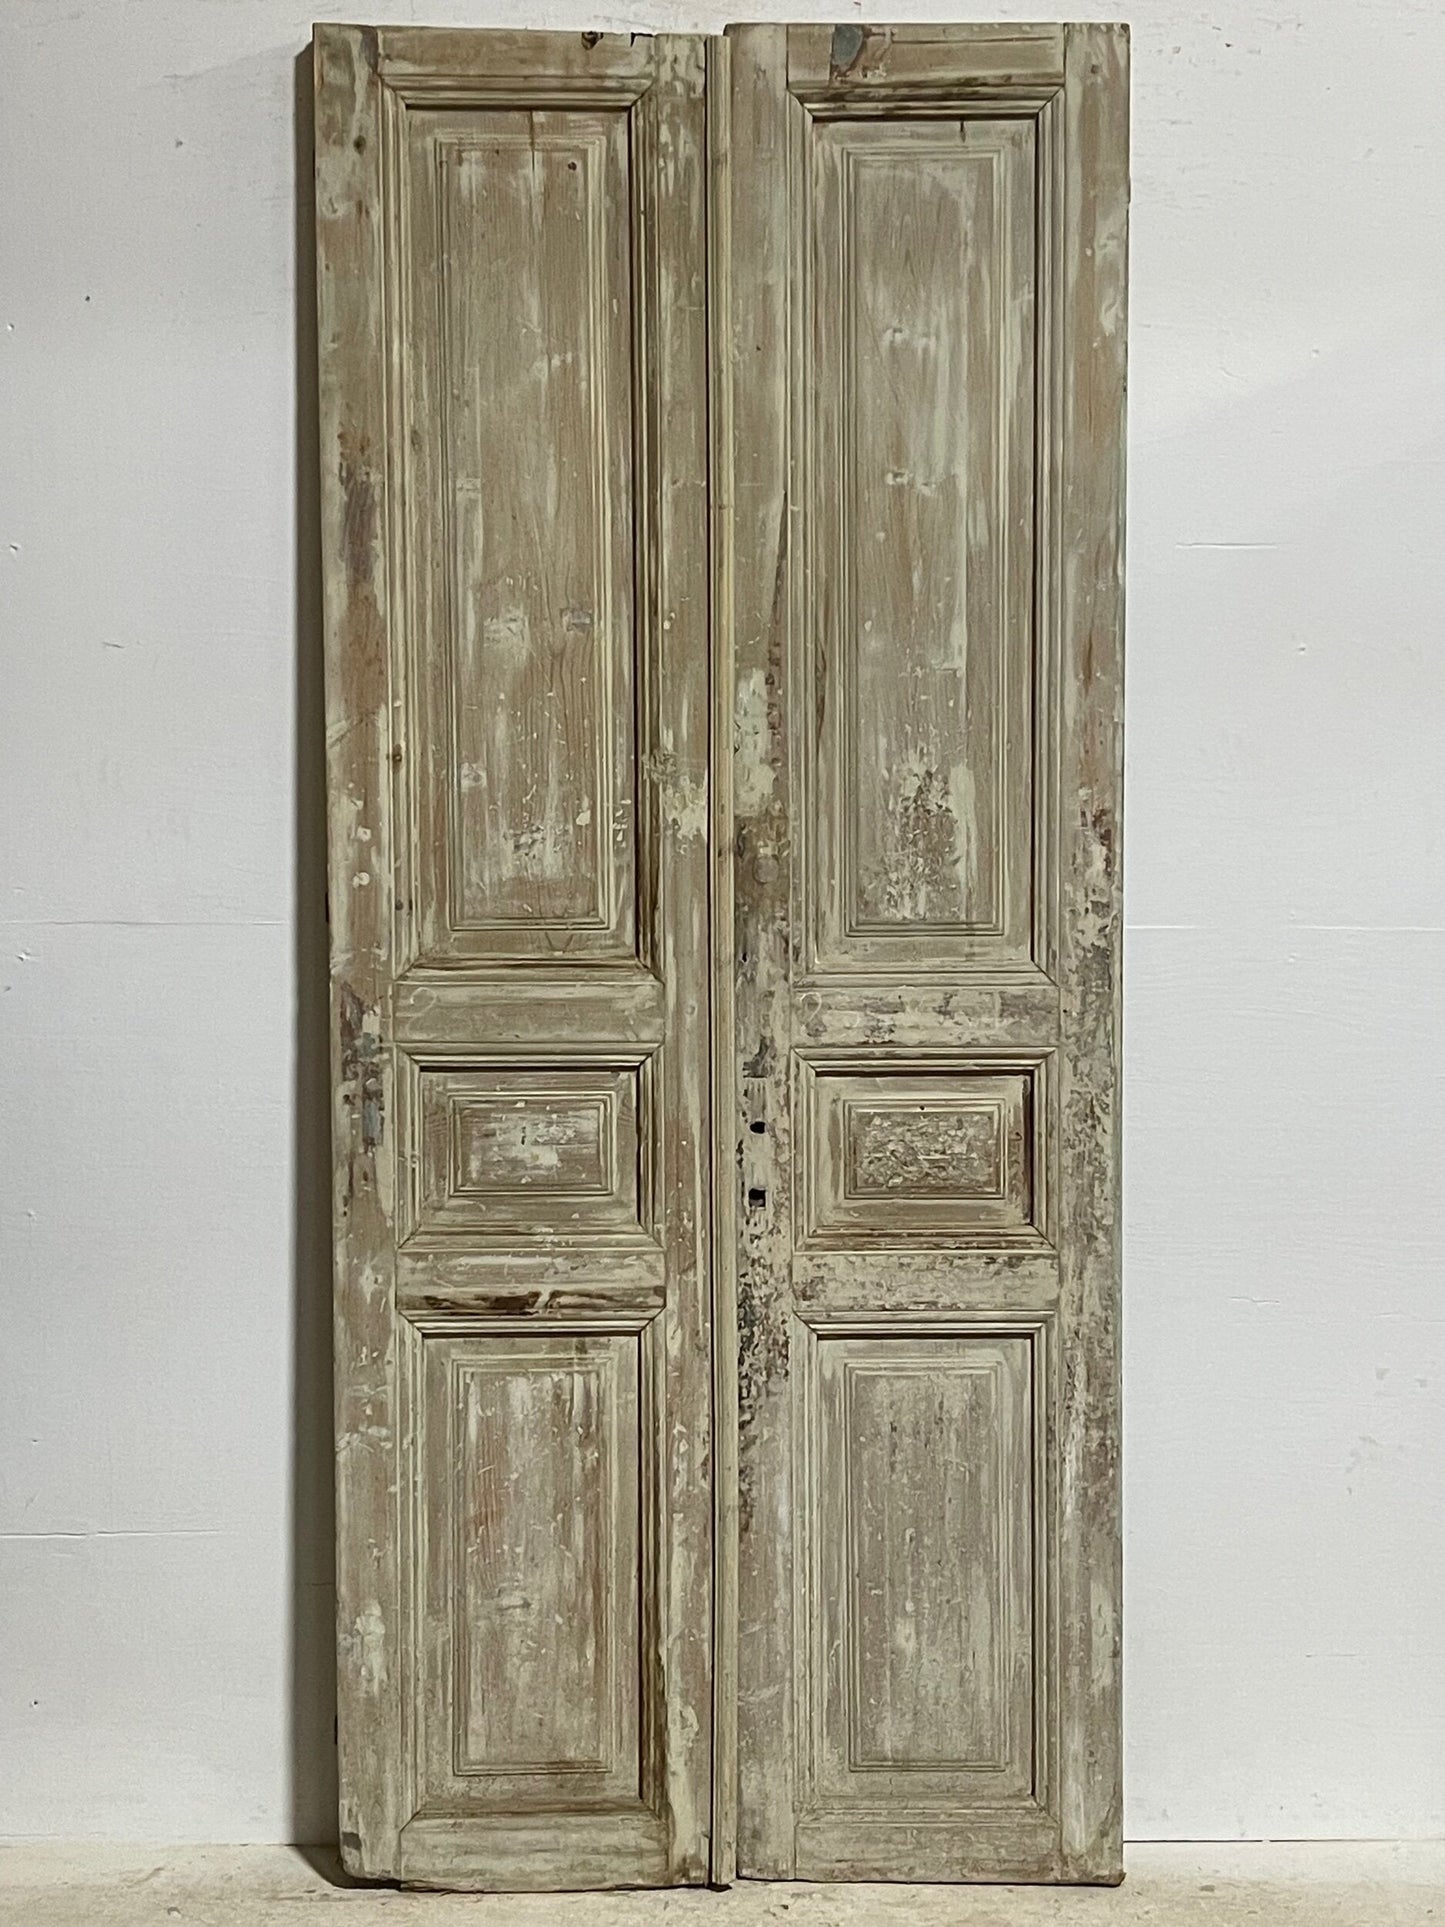 Antique French doors (92x39.25) H0197s